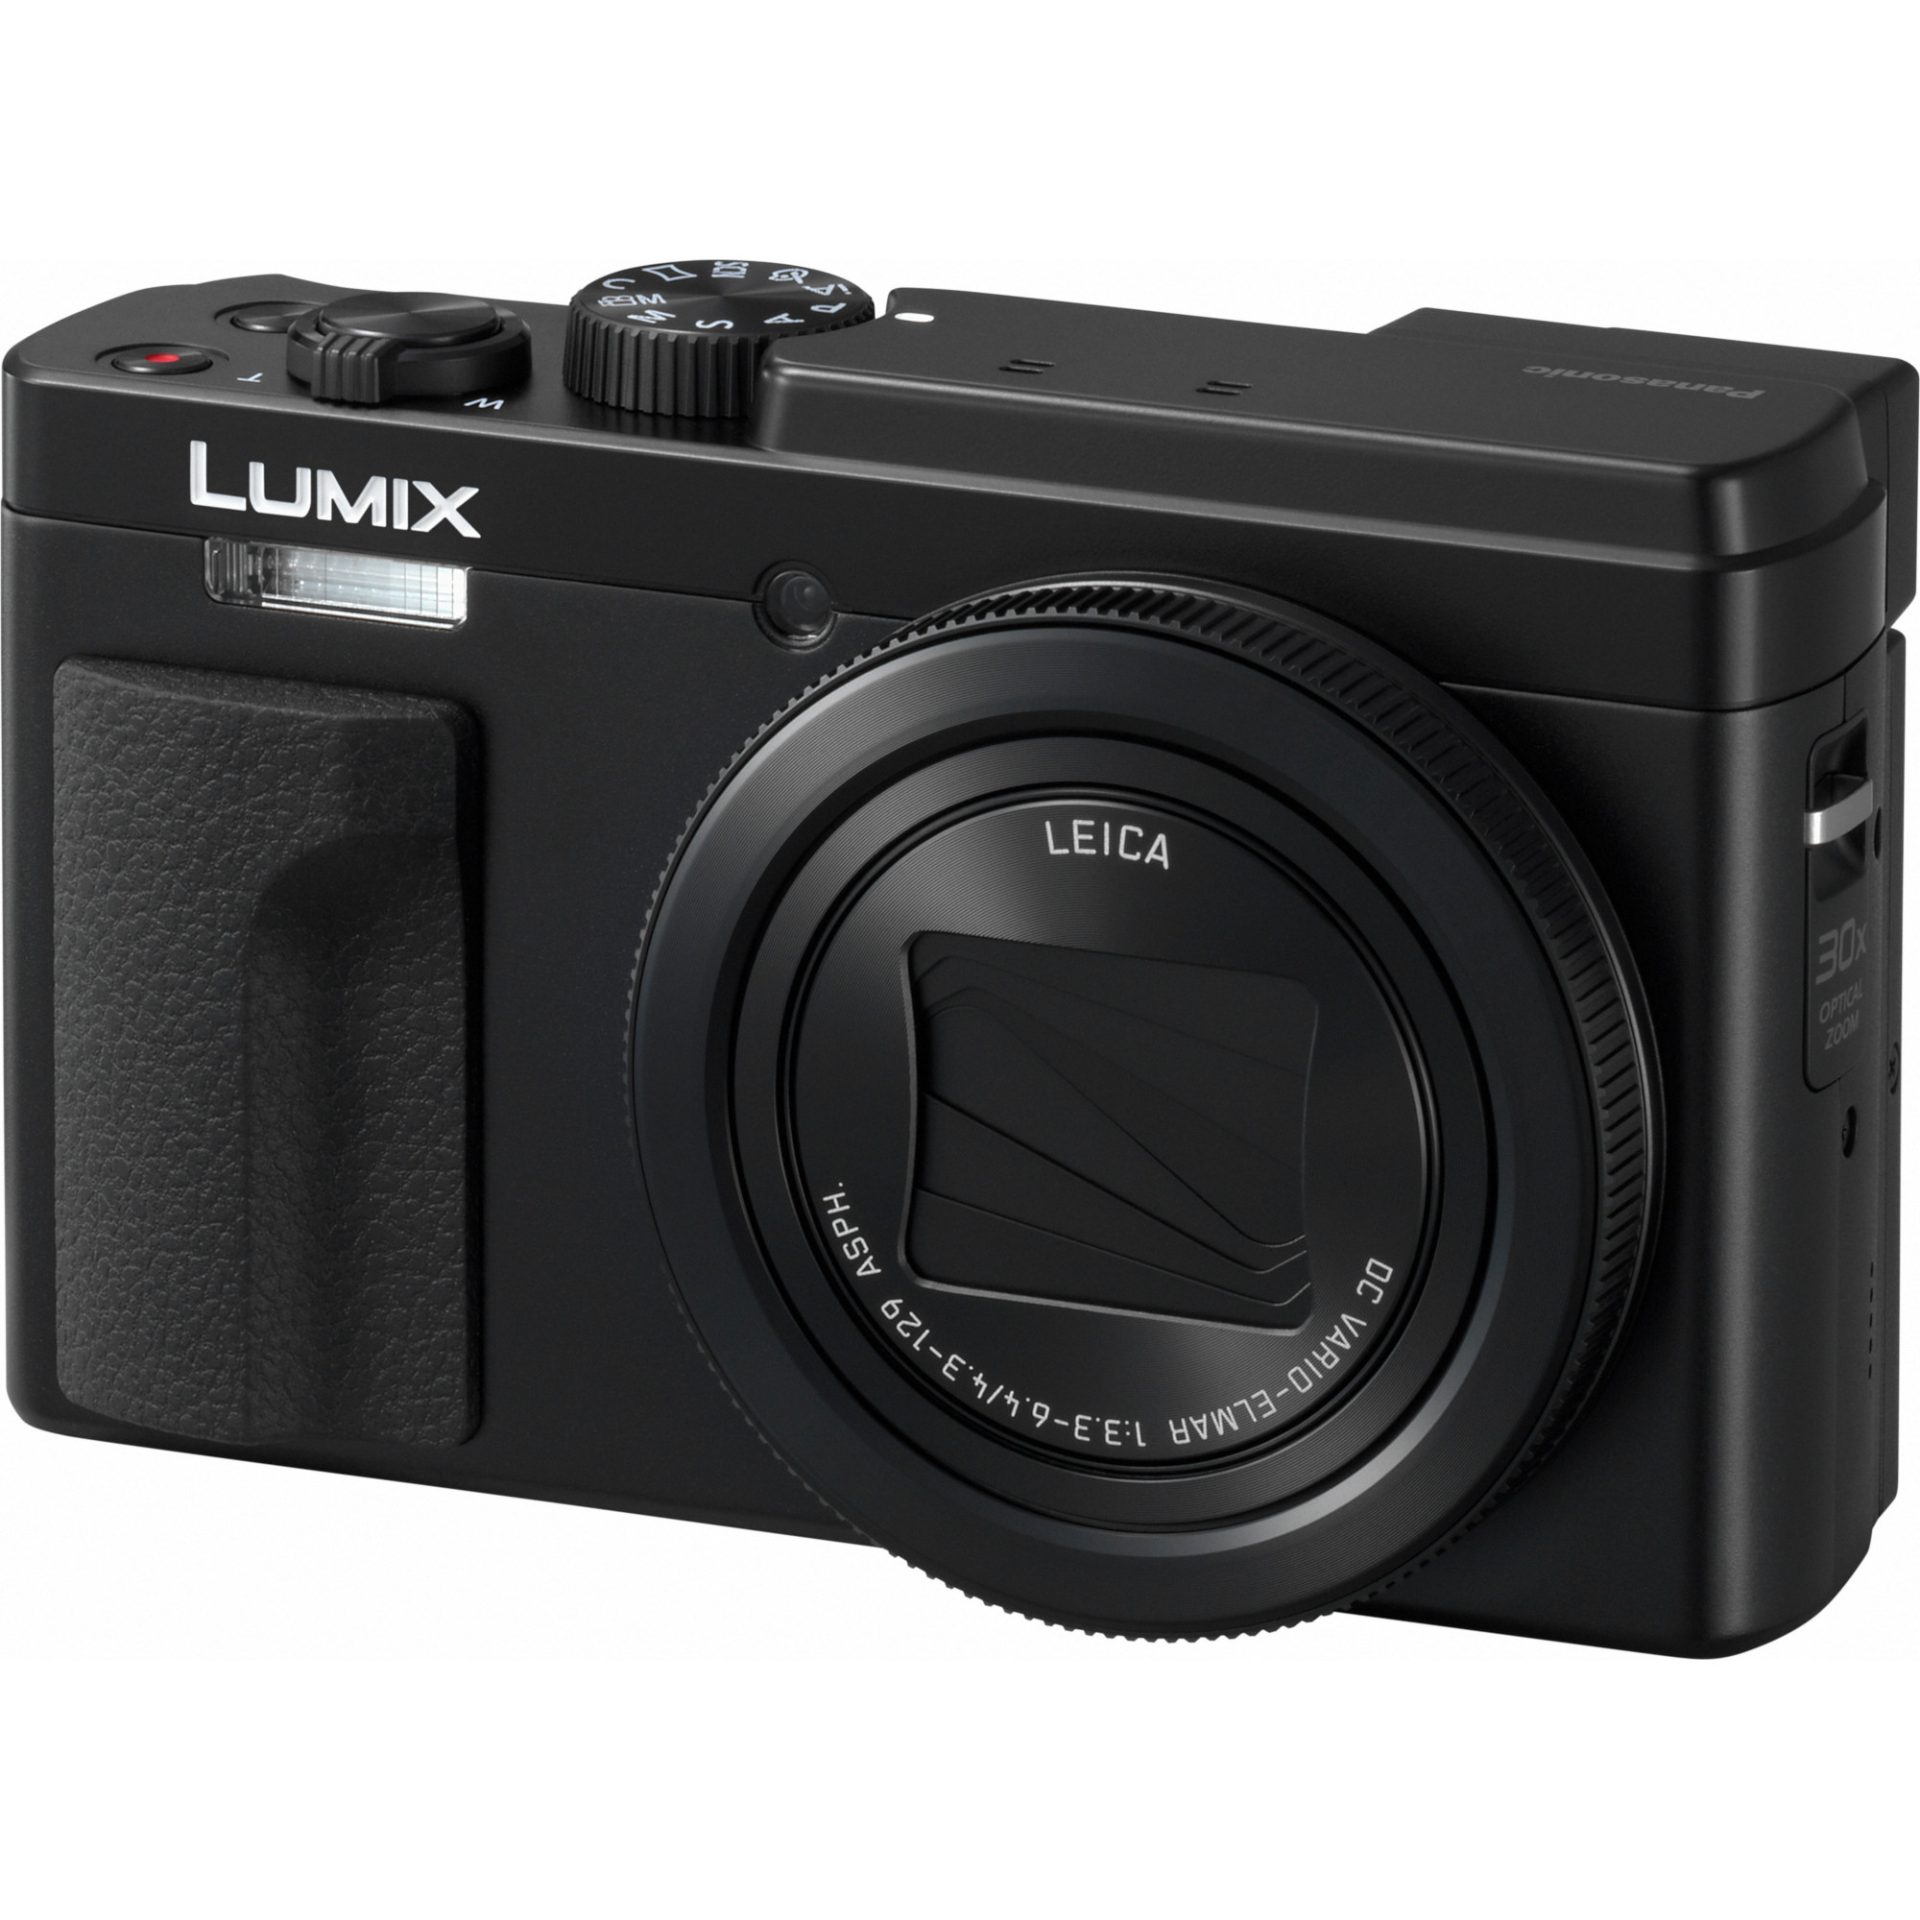 Panasonic DC-TZ95 Lumix kompaktní digitální fotoaparát (MOS 20.3MP, optický zoom 30x, selfie 4K, 4K video, Post Focus, LVF hledáček 2330 tisíc bodů),